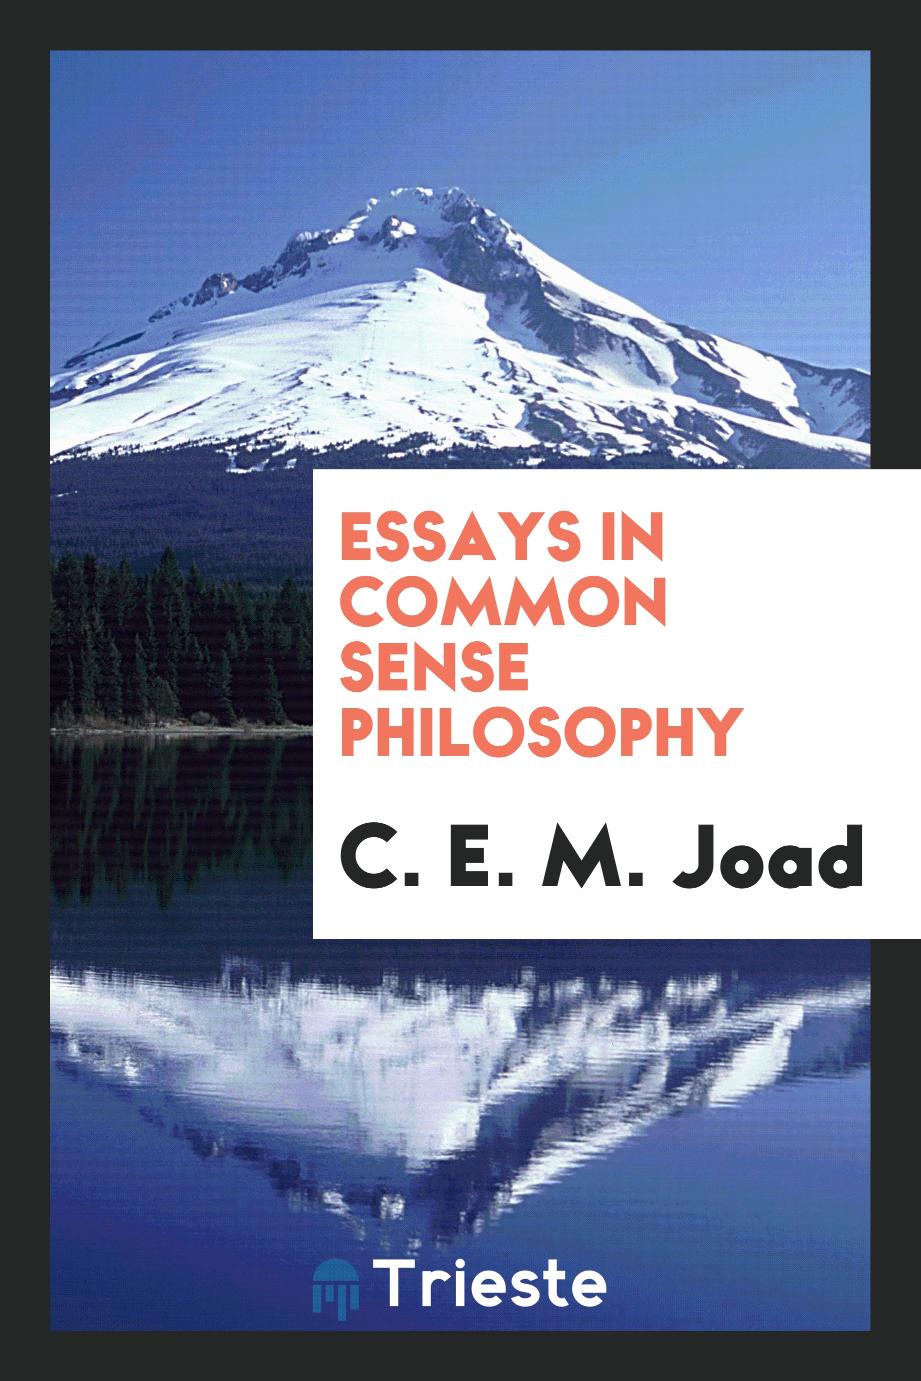 Essays in common sense philosophy